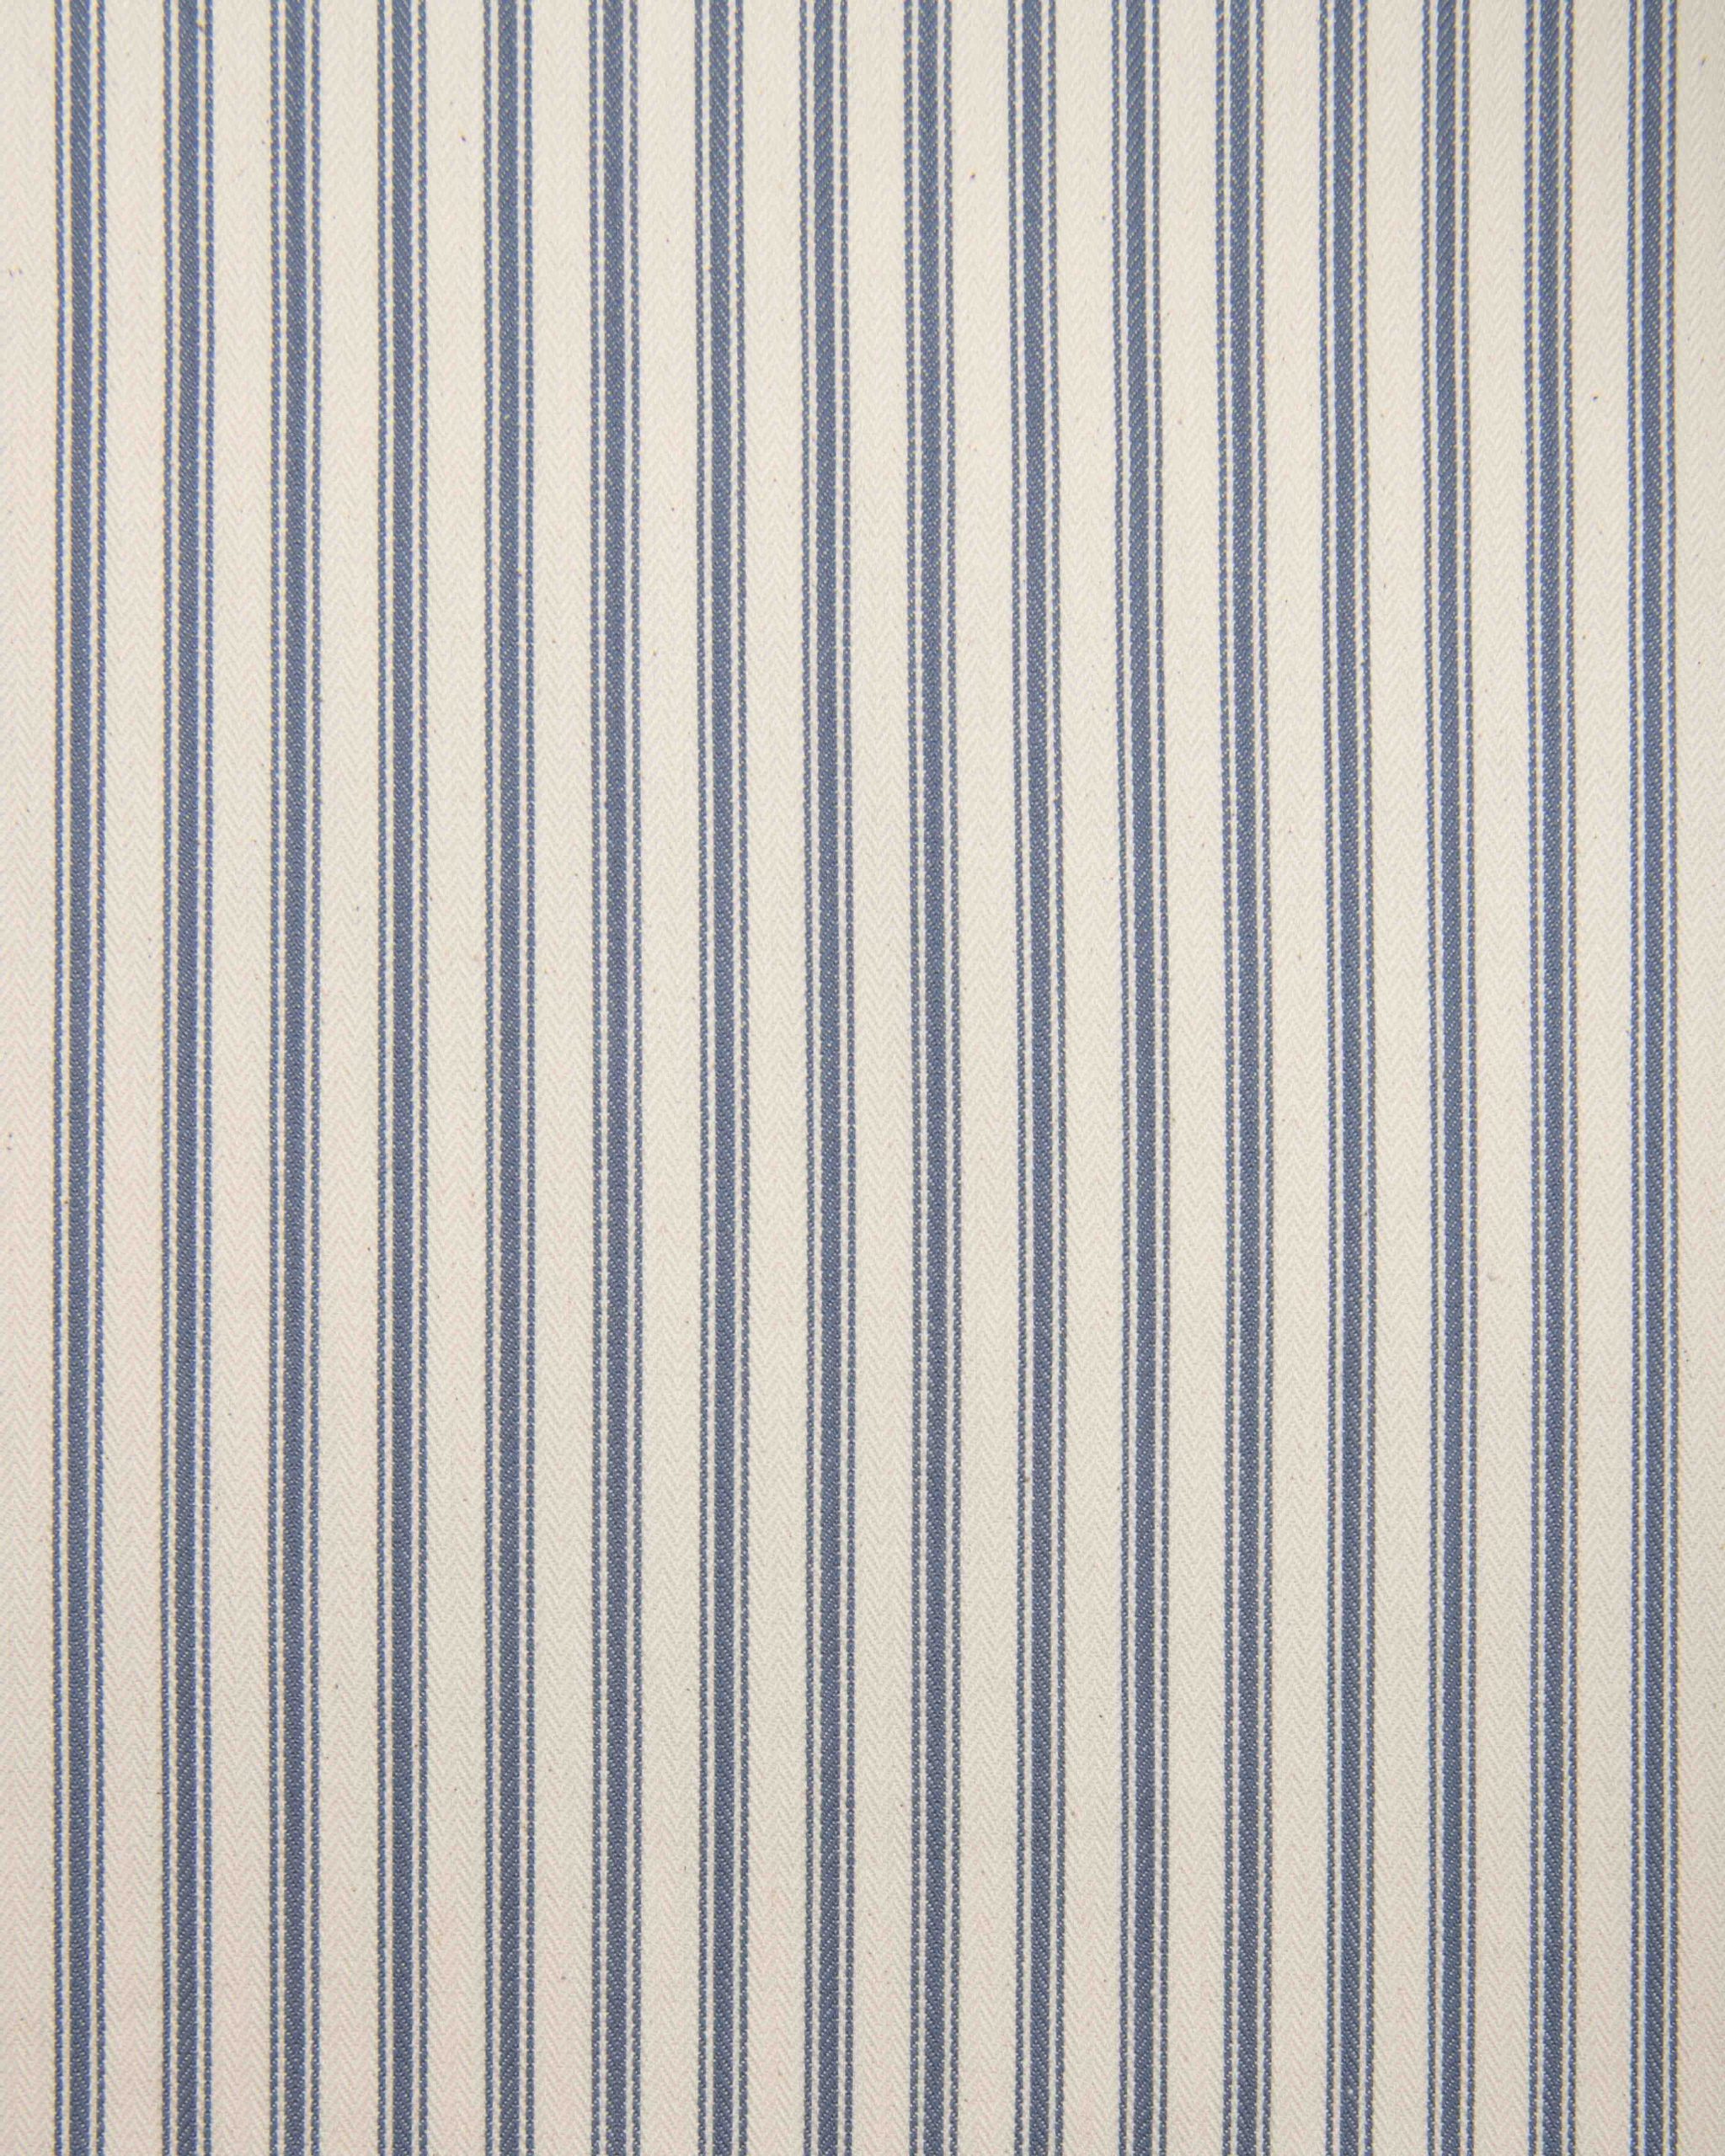 OL19 - Blue Ticking Stripe